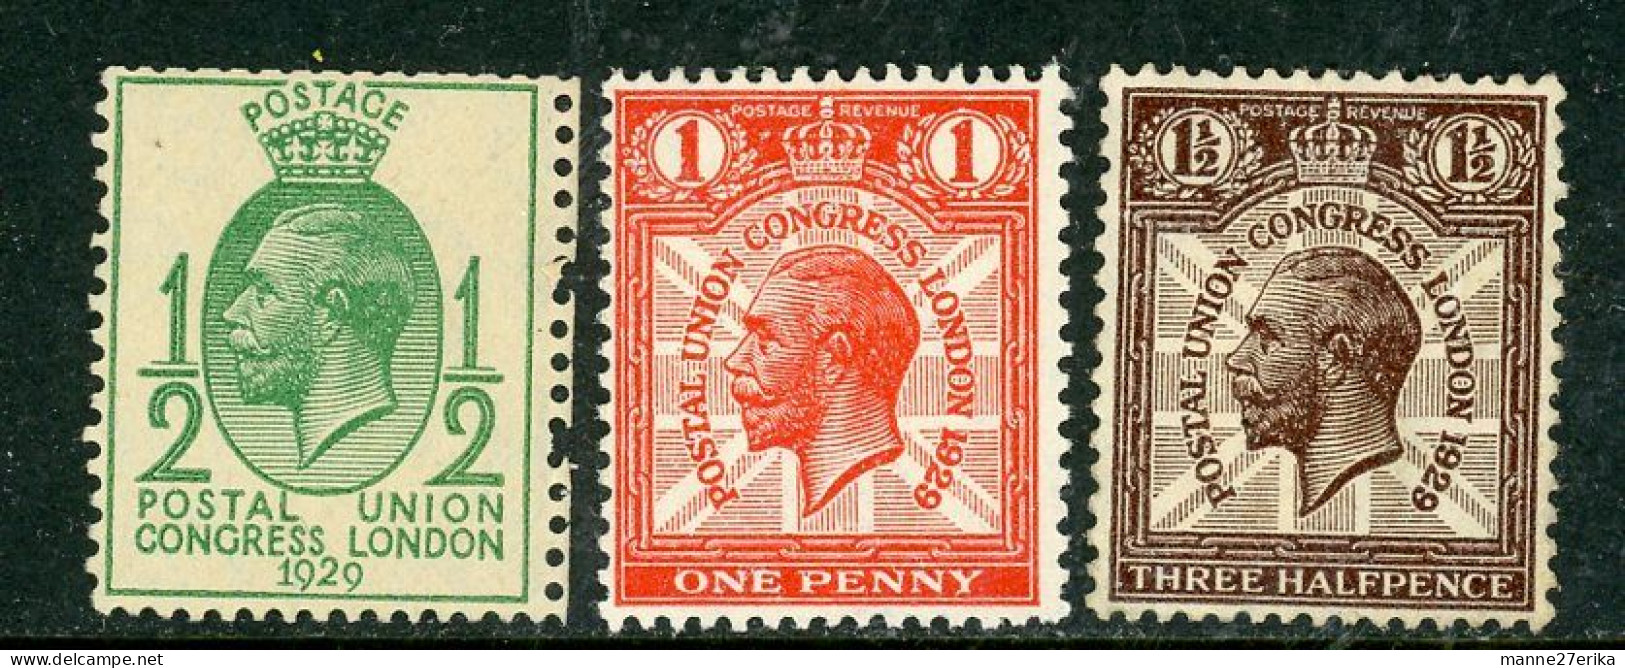 Great Britain MH 1929 - Unused Stamps